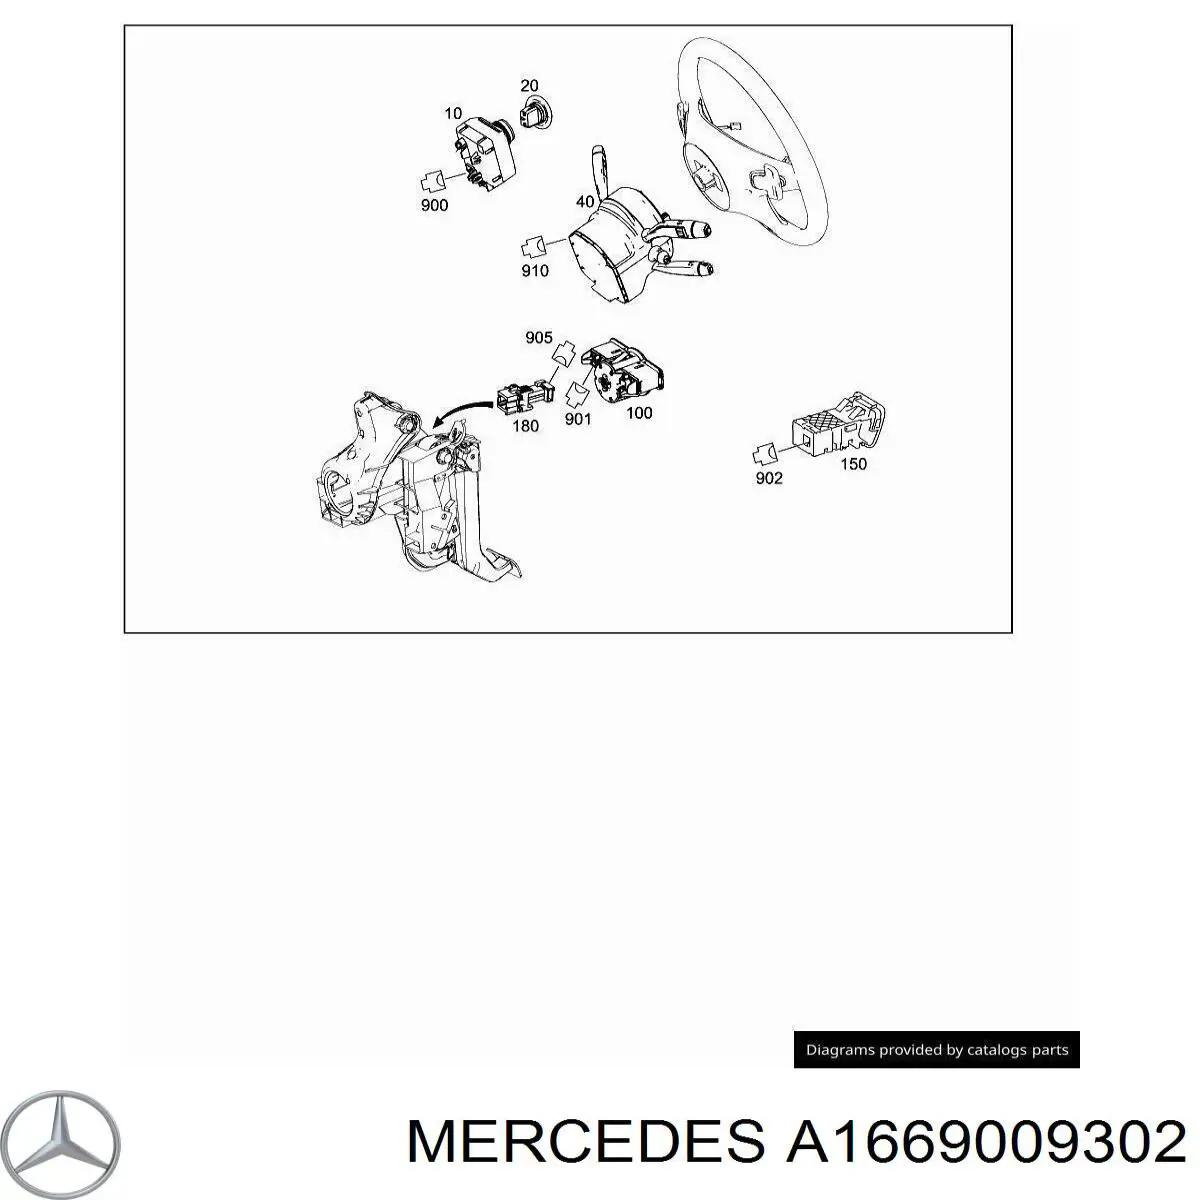 A1669009302 Mercedes 